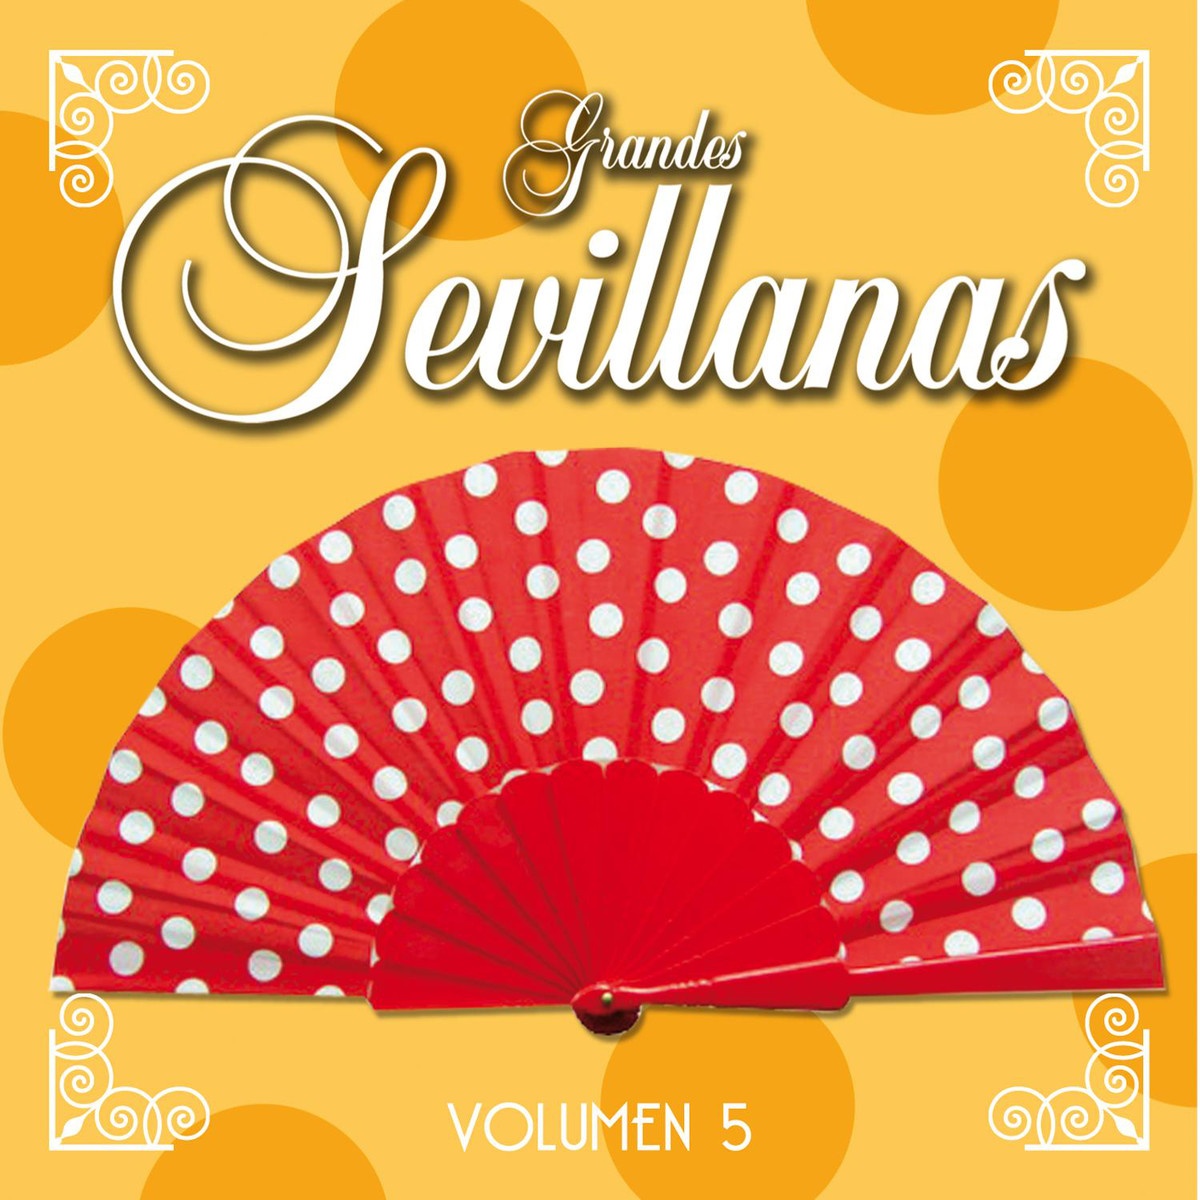 Grandes Sevillanas - Vol. 5